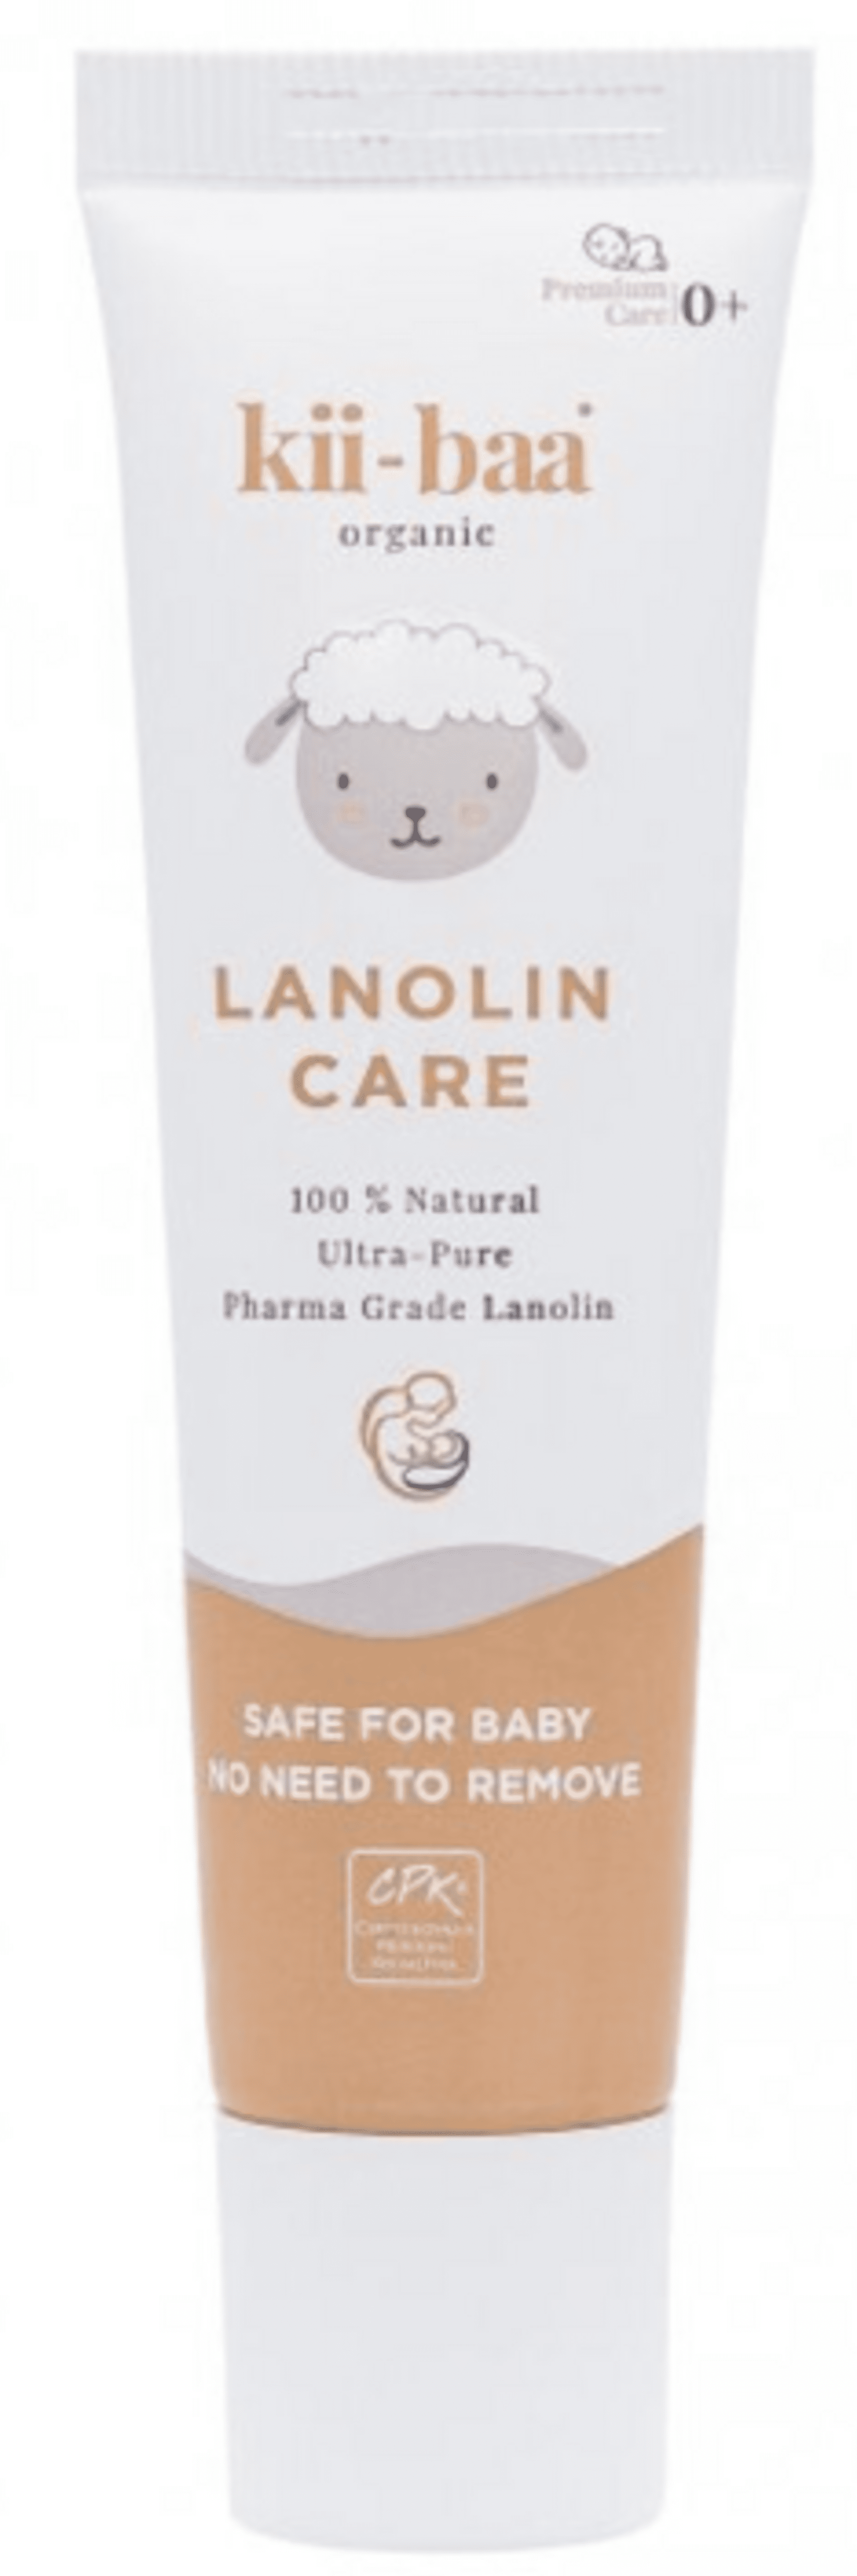 Kii-baa organic Lanolin care ultračistý 100 % 0+ 30 g